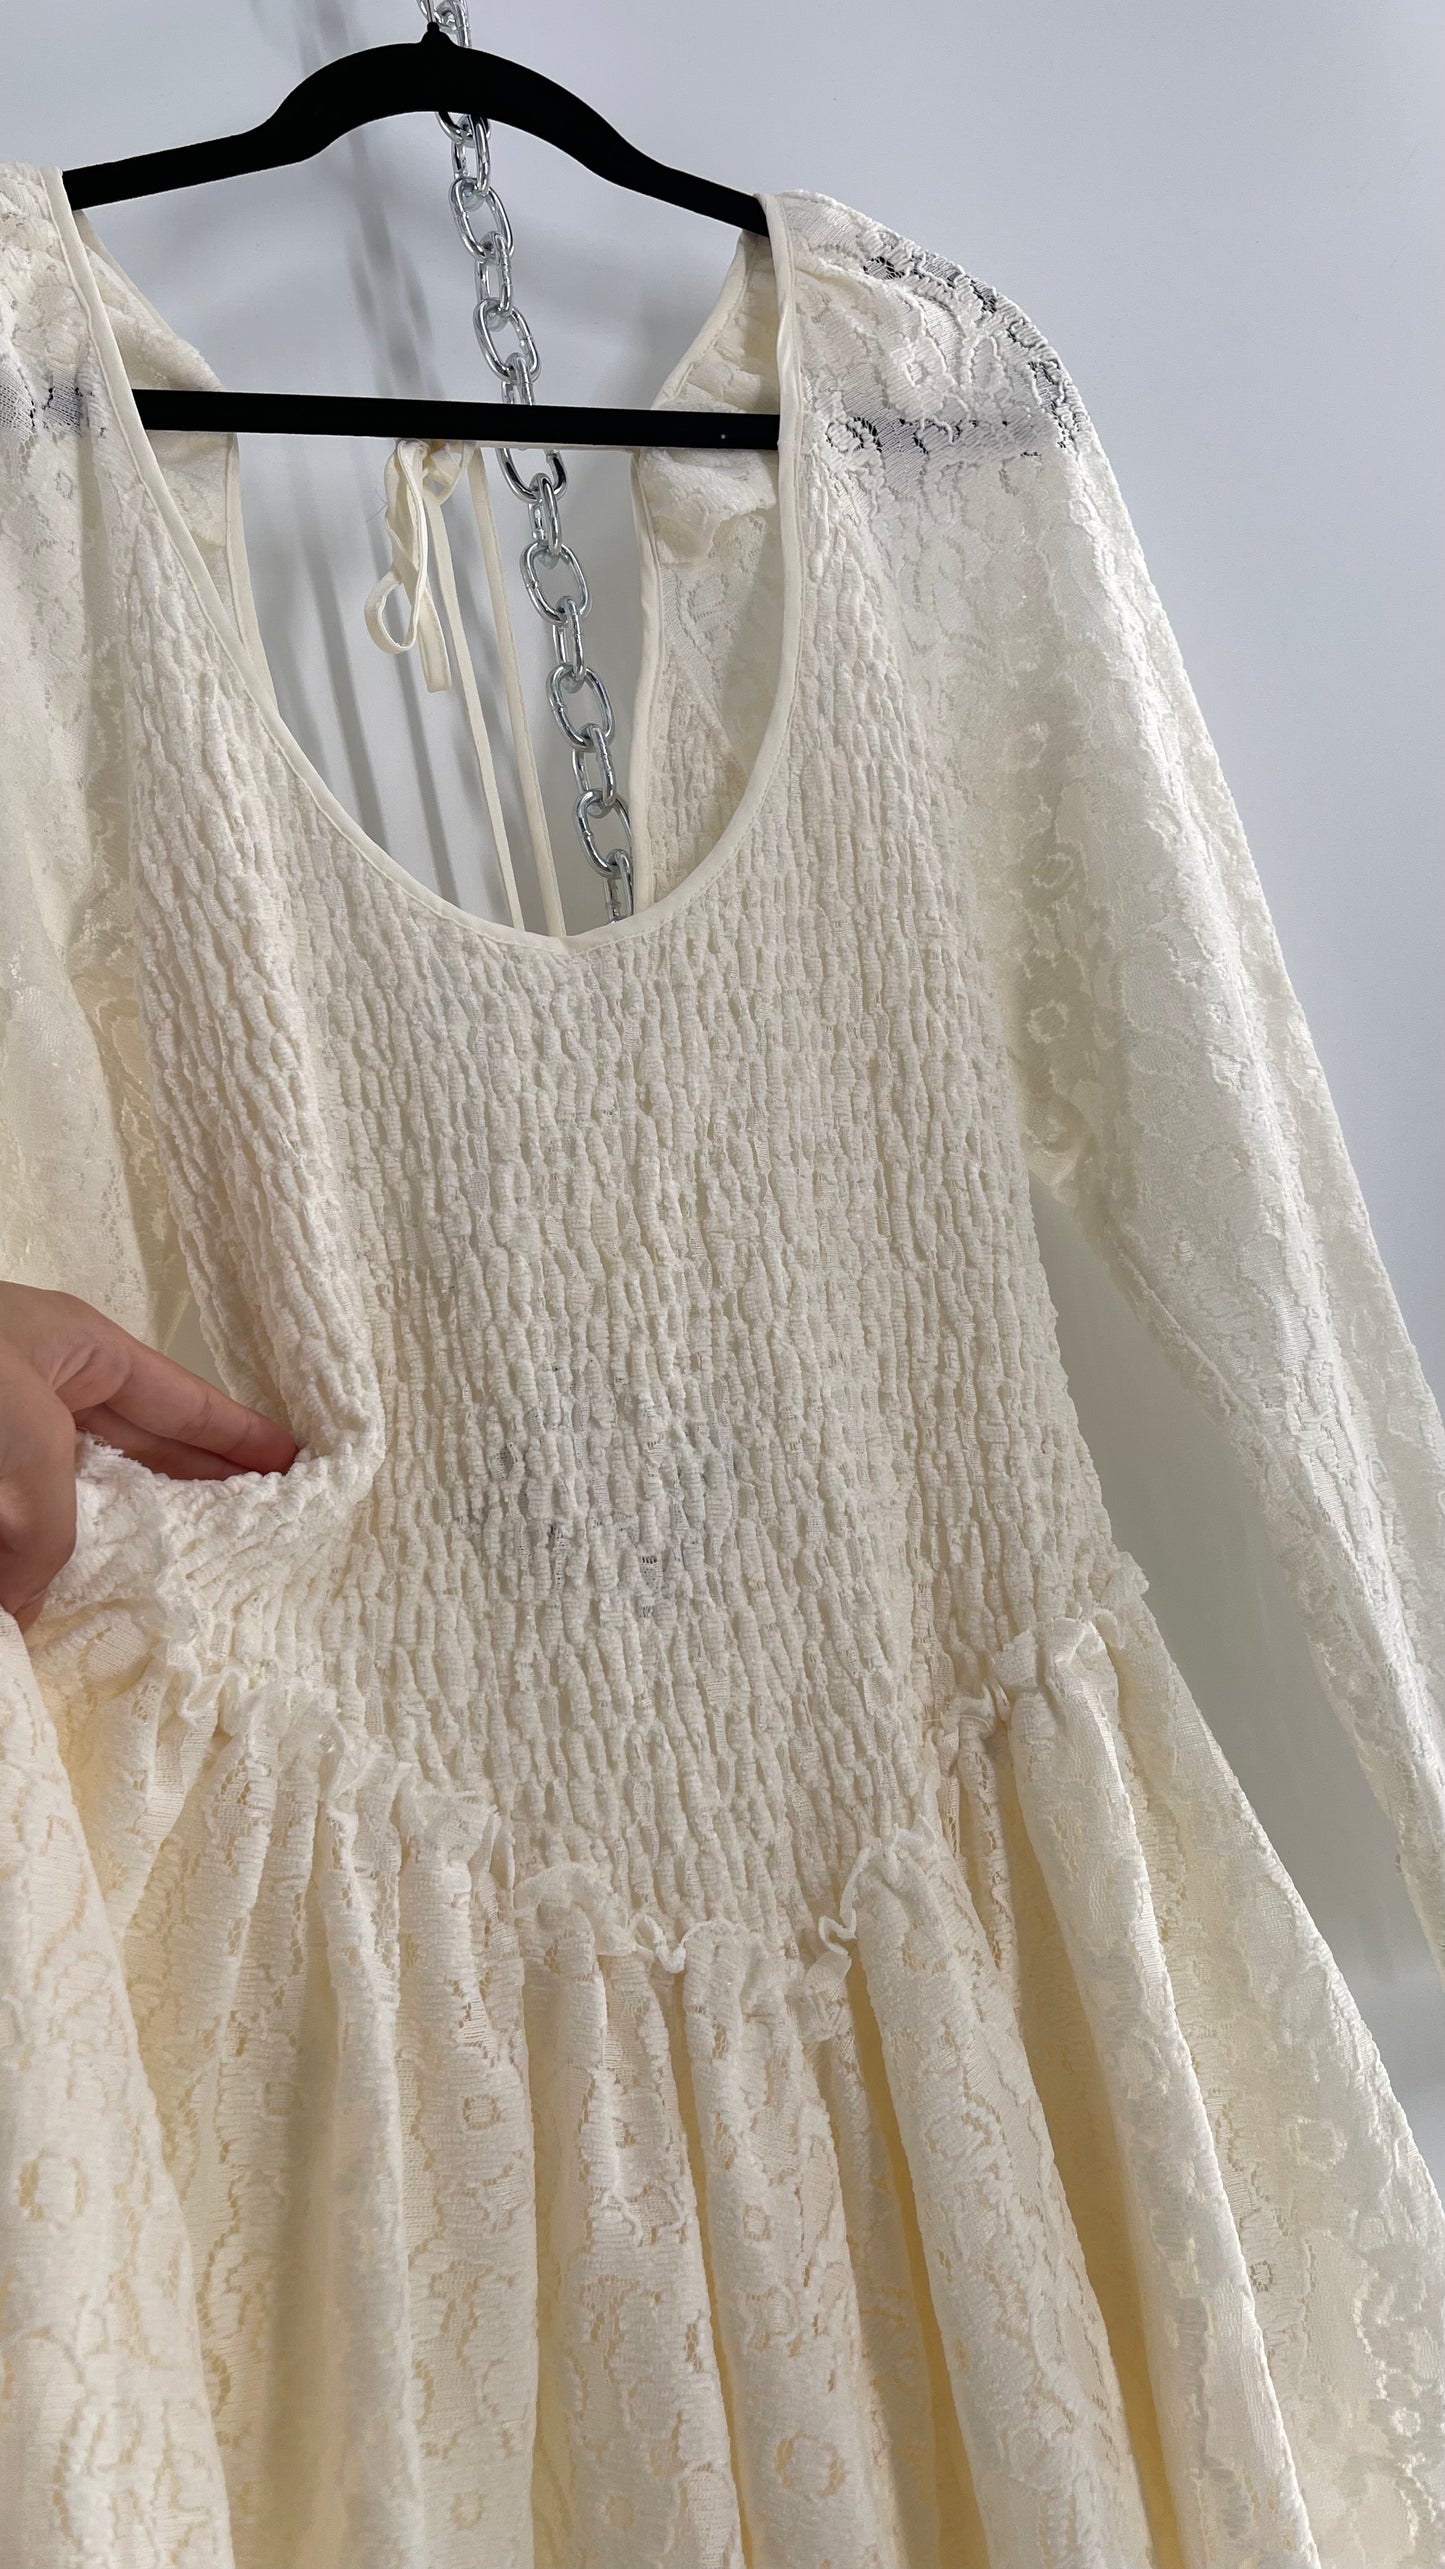 Free People White Velvet Lace Dress with Smocked Bodice and Pointed Waistline (Medium)